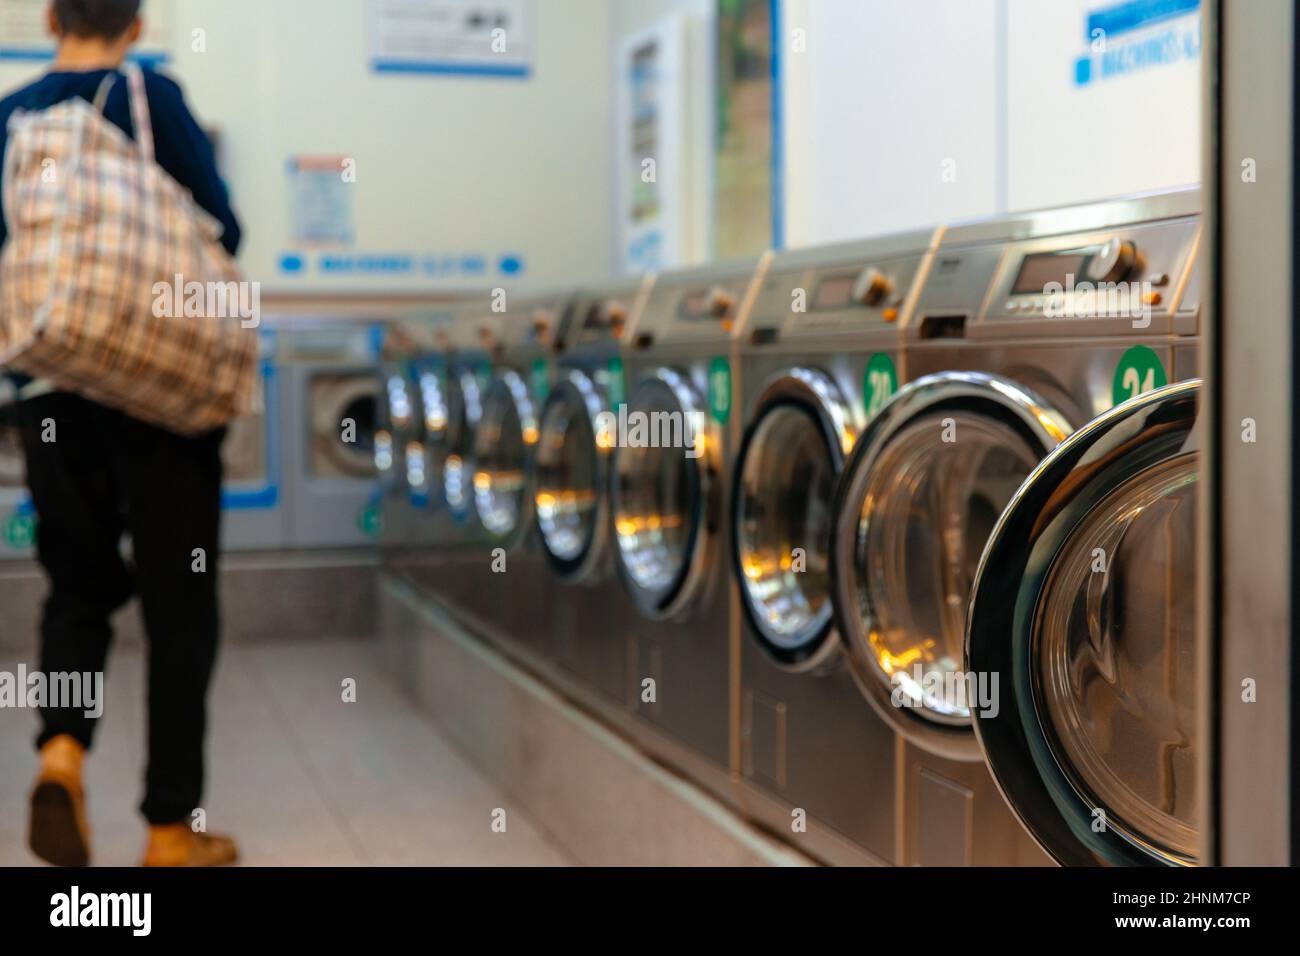 Iaundry machines in laundromat. Stock Photo